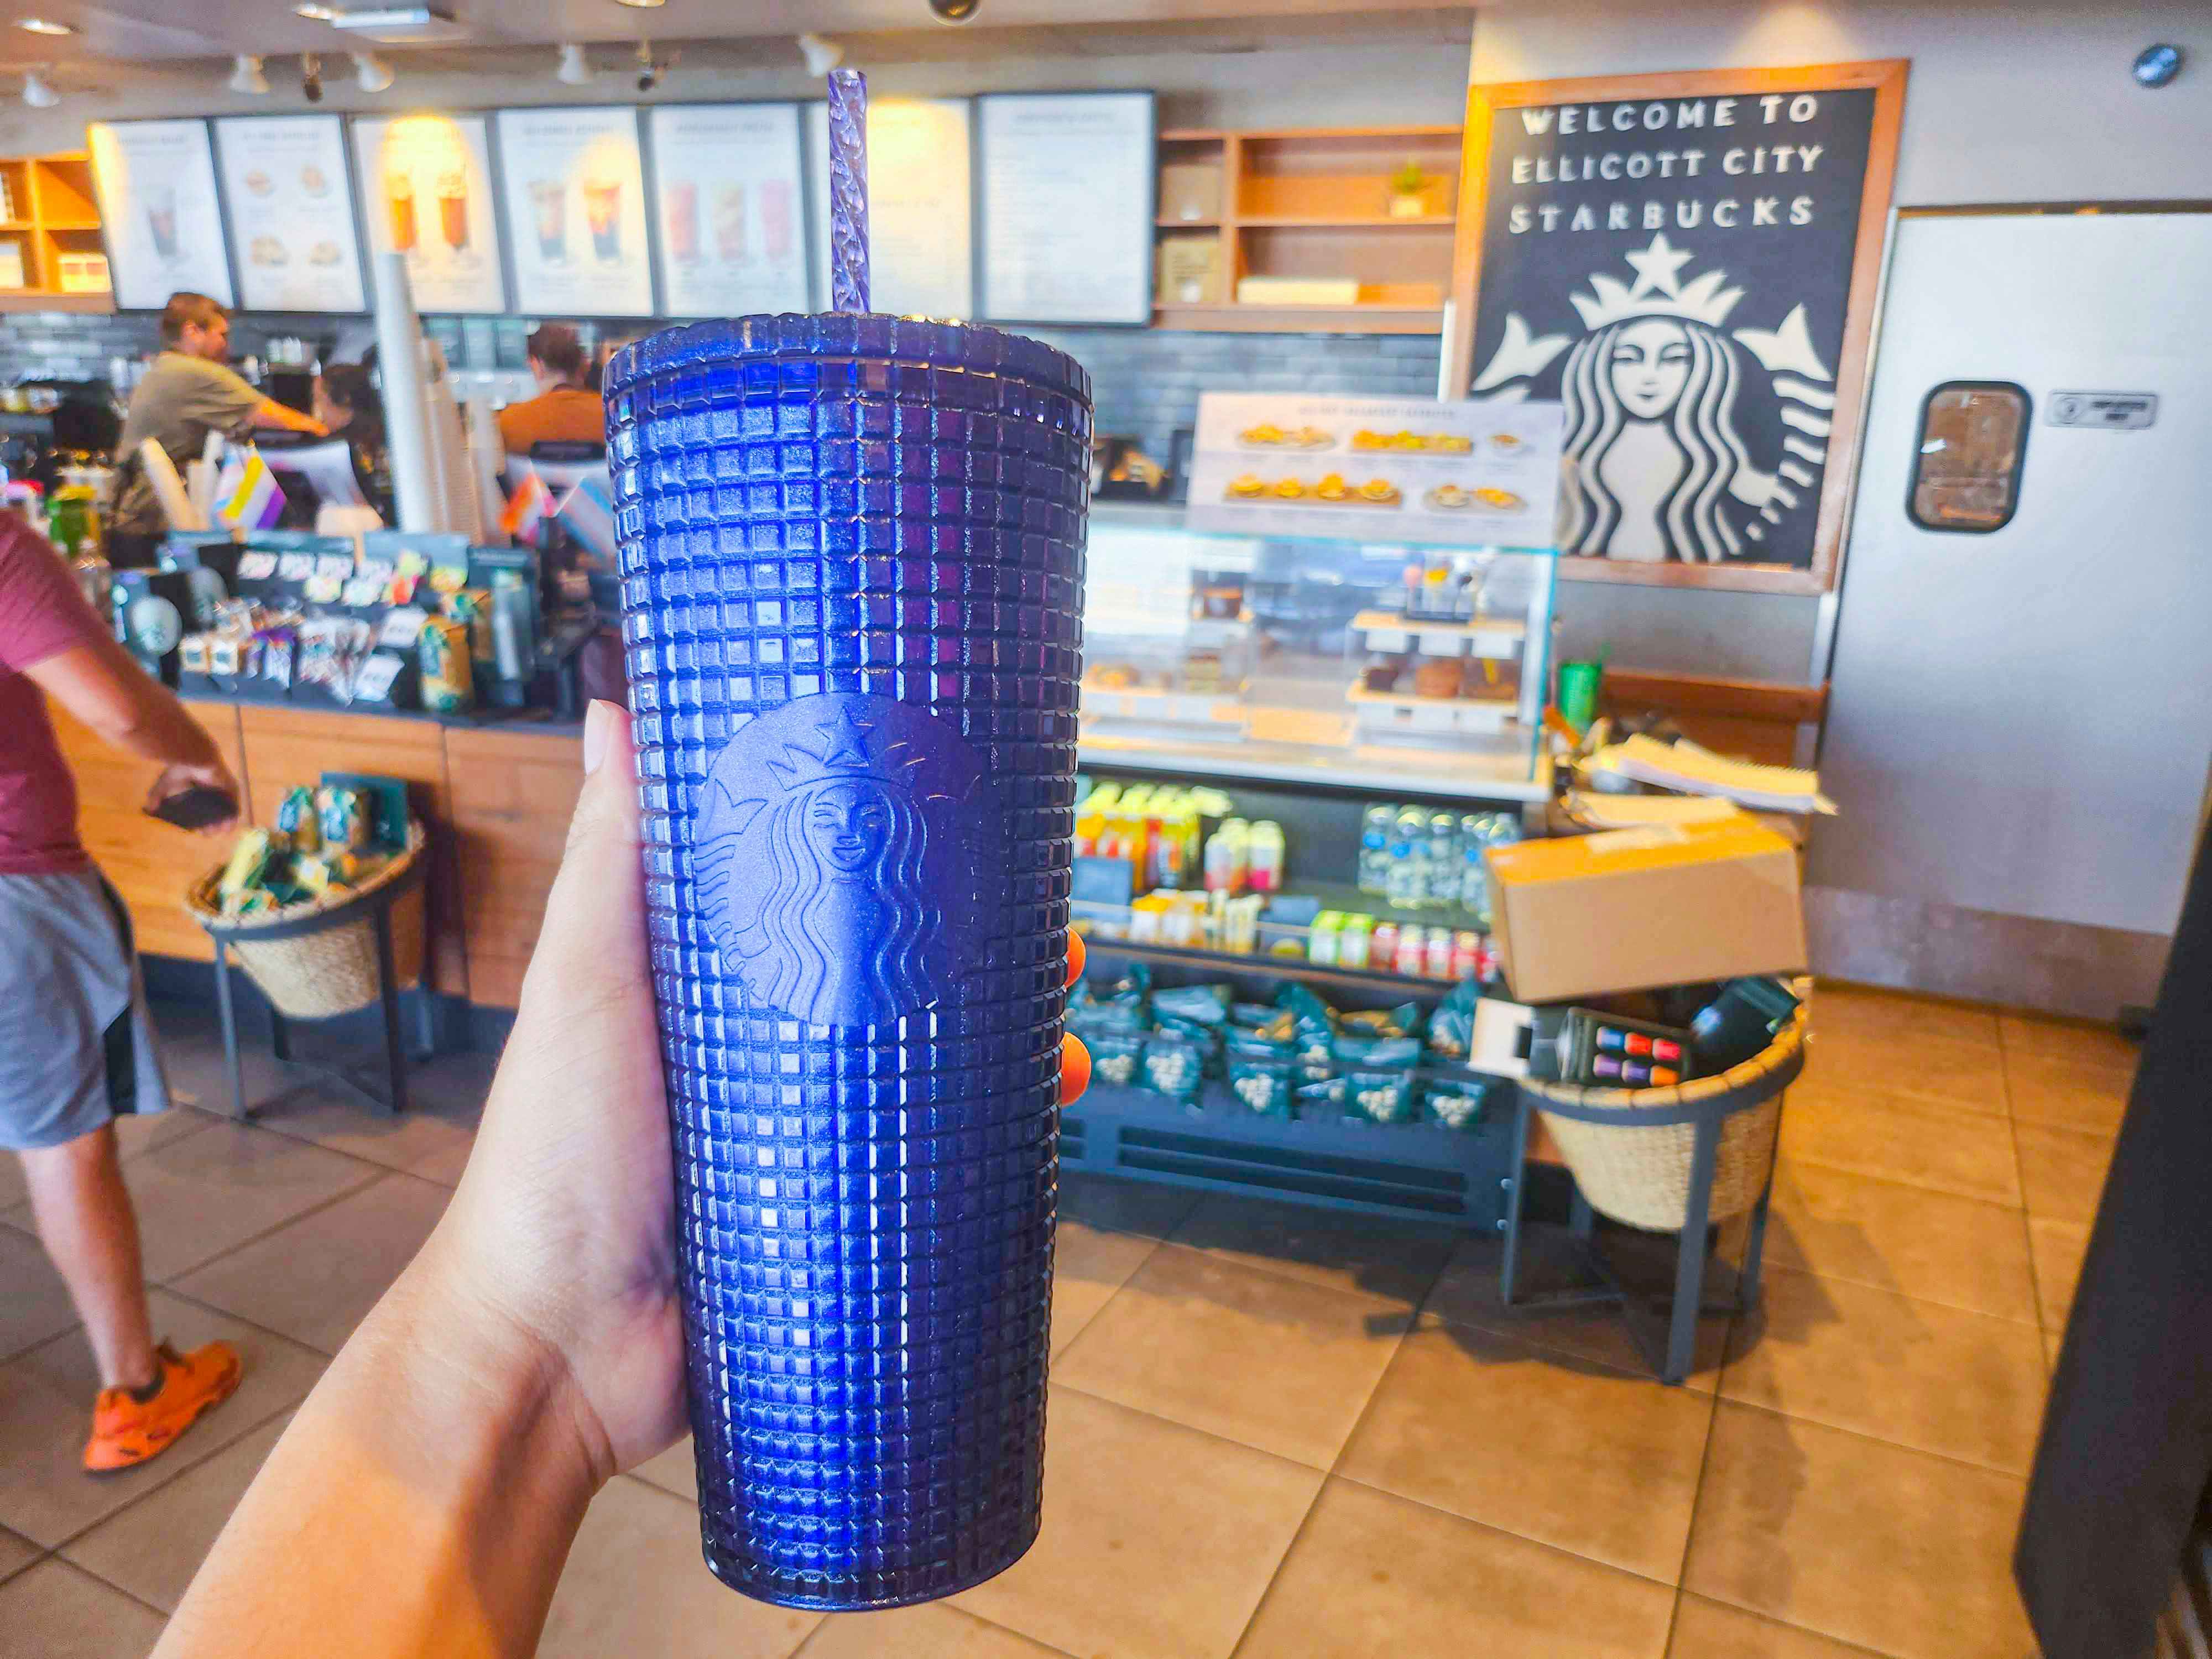 Starbucks Core Plastic Cold Cup - Clear, 24 oz - City Market